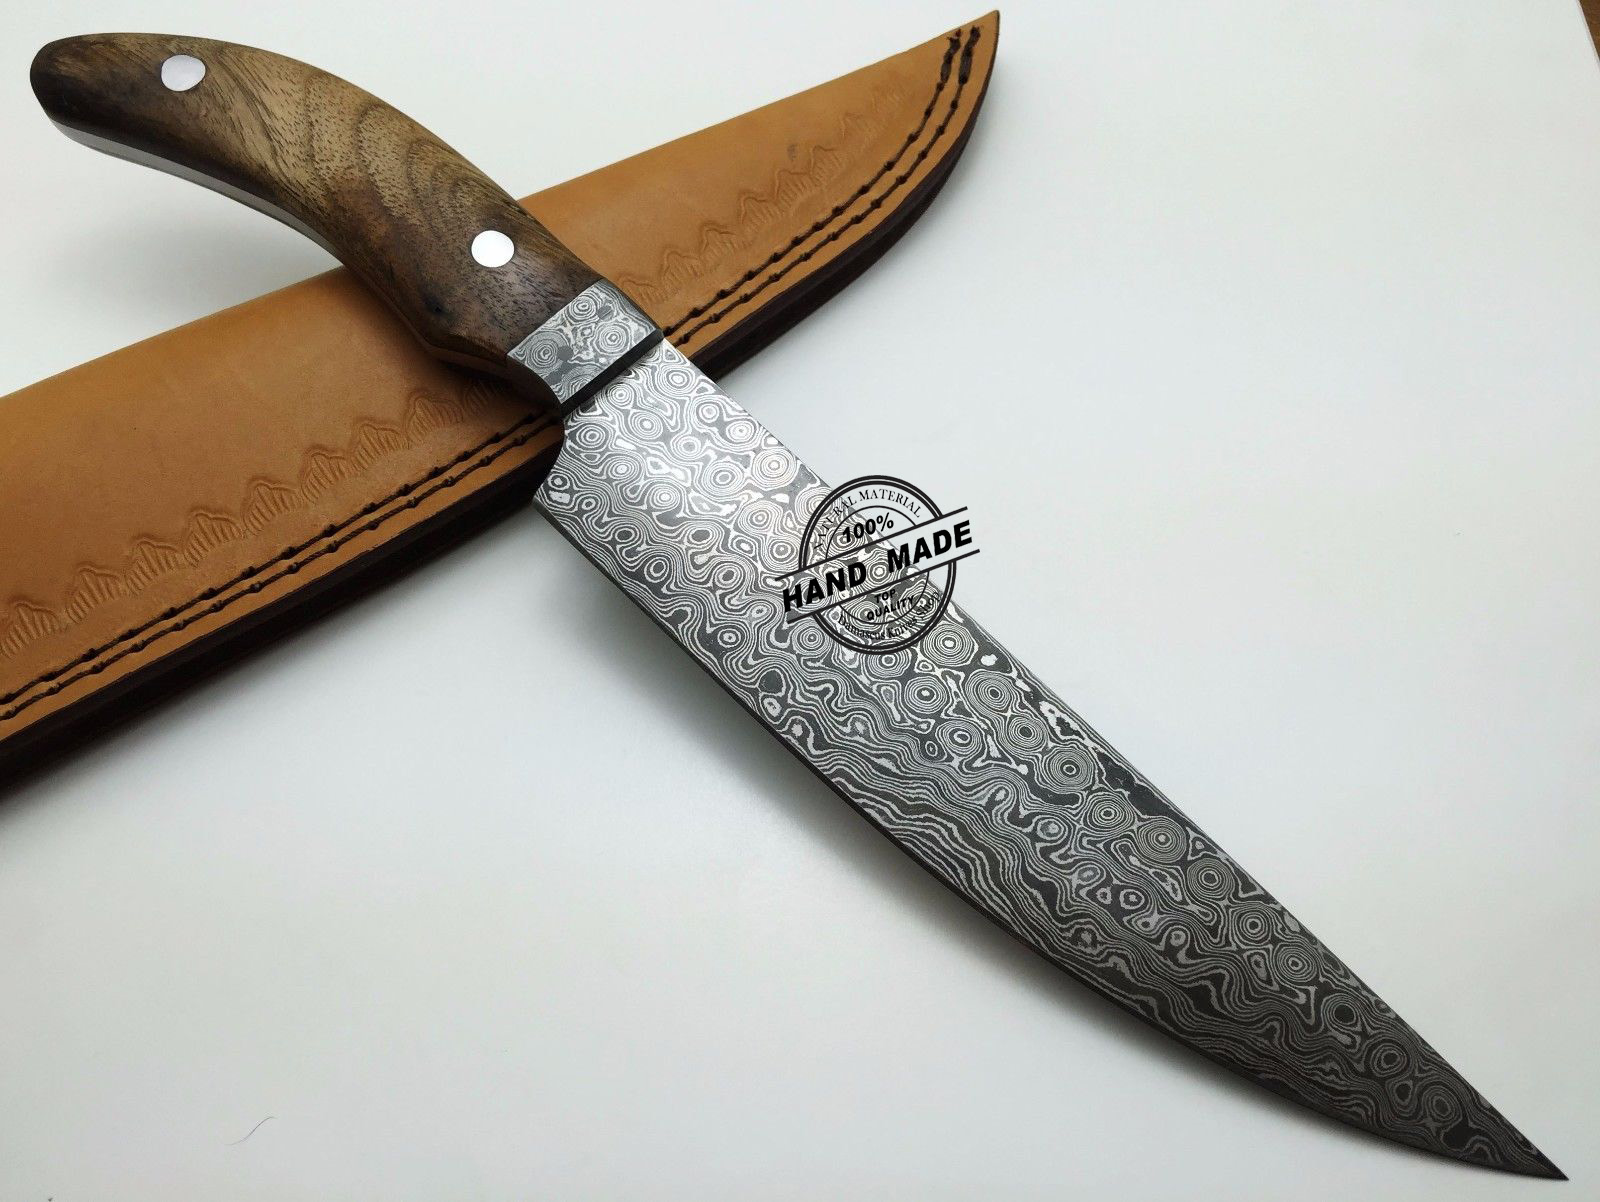 https://www.damascusknivesshop.com/wp-content/uploads/2015/11/Damascus-Kitchen-Knife-0046.jpg